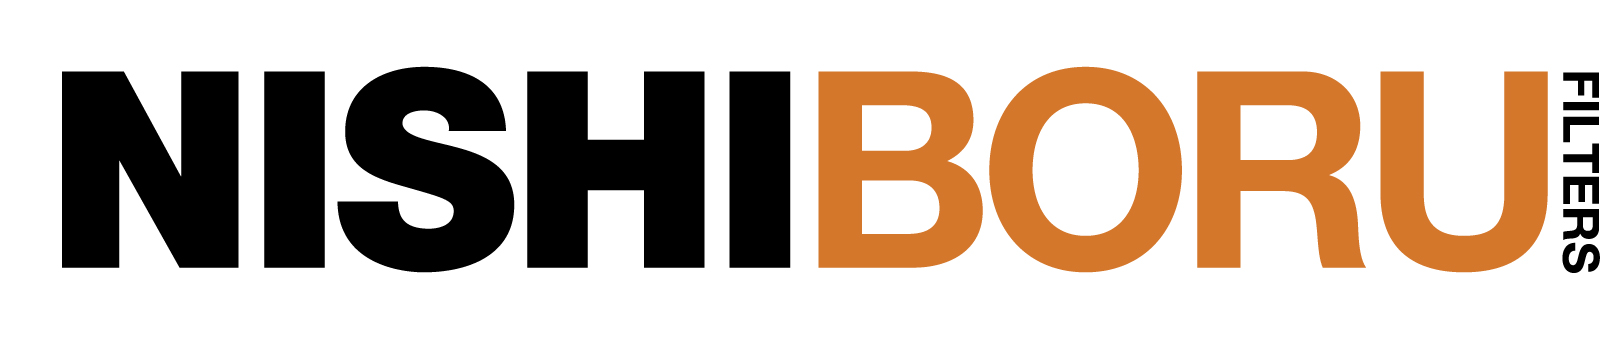 Производитель NISHIBORU логотип